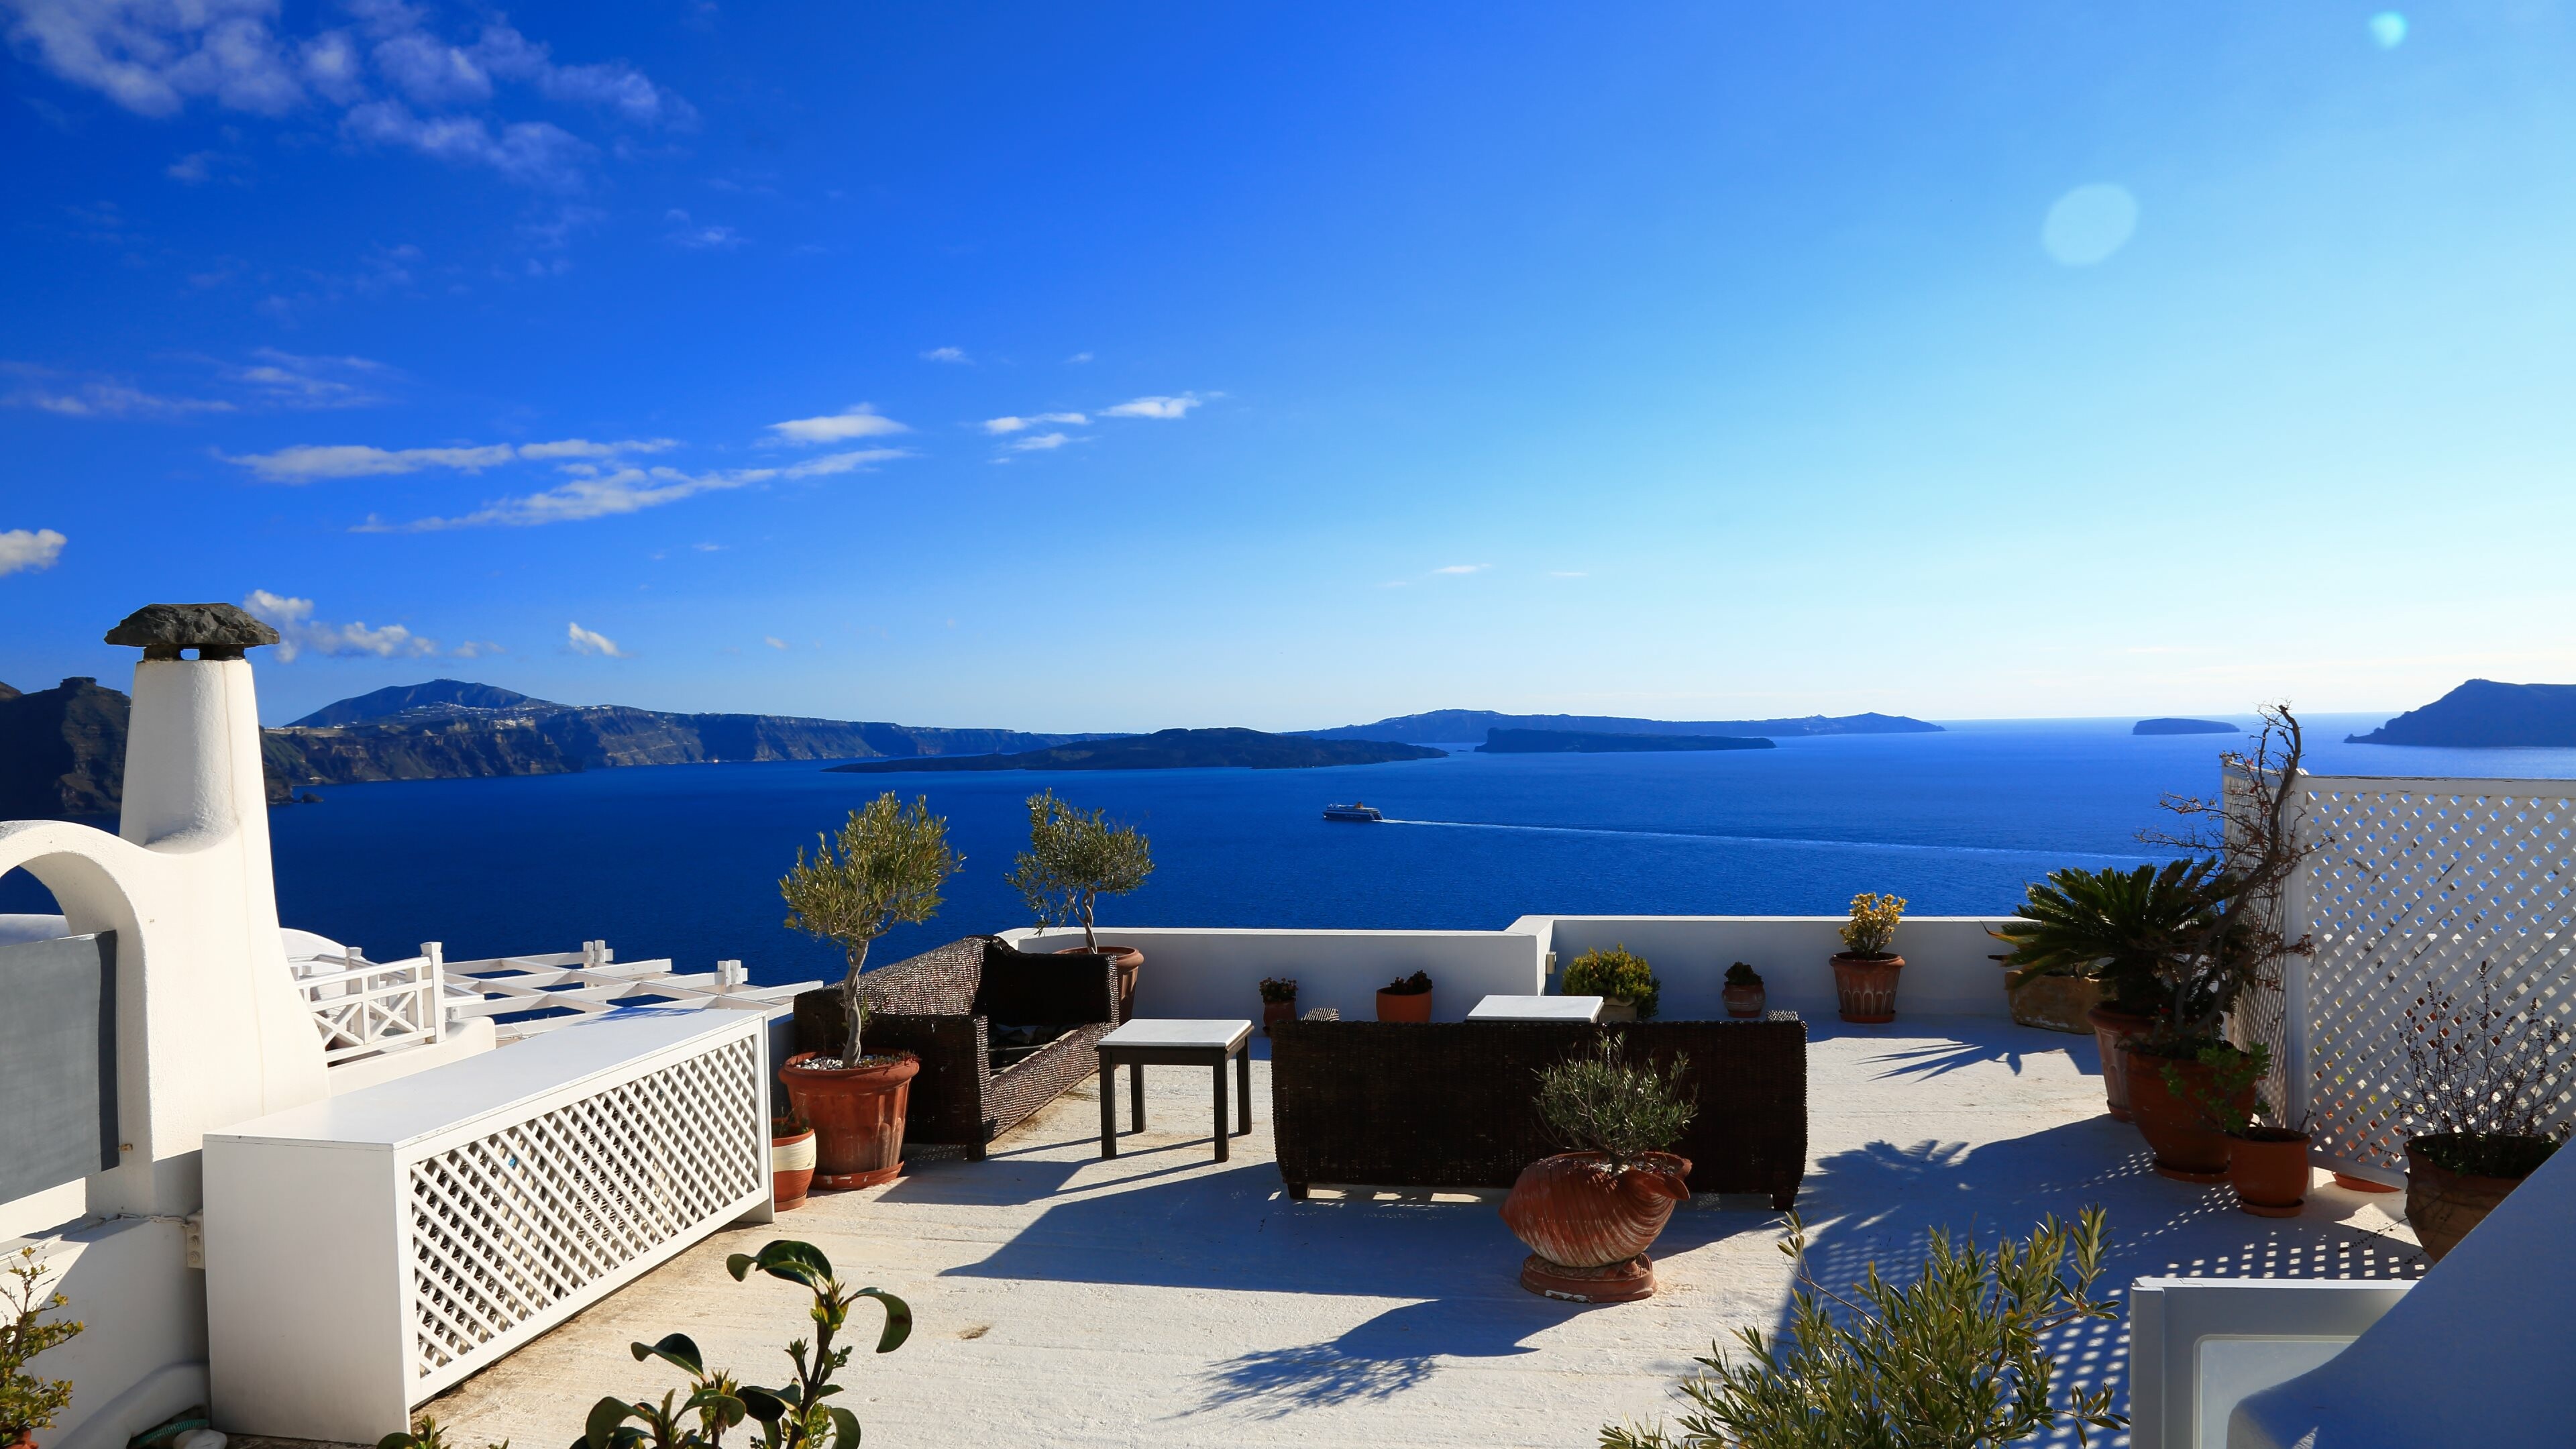 Greece: Santorini, The Aegean Sea lies to the east of the mainland. 3840x2160 4K Wallpaper.